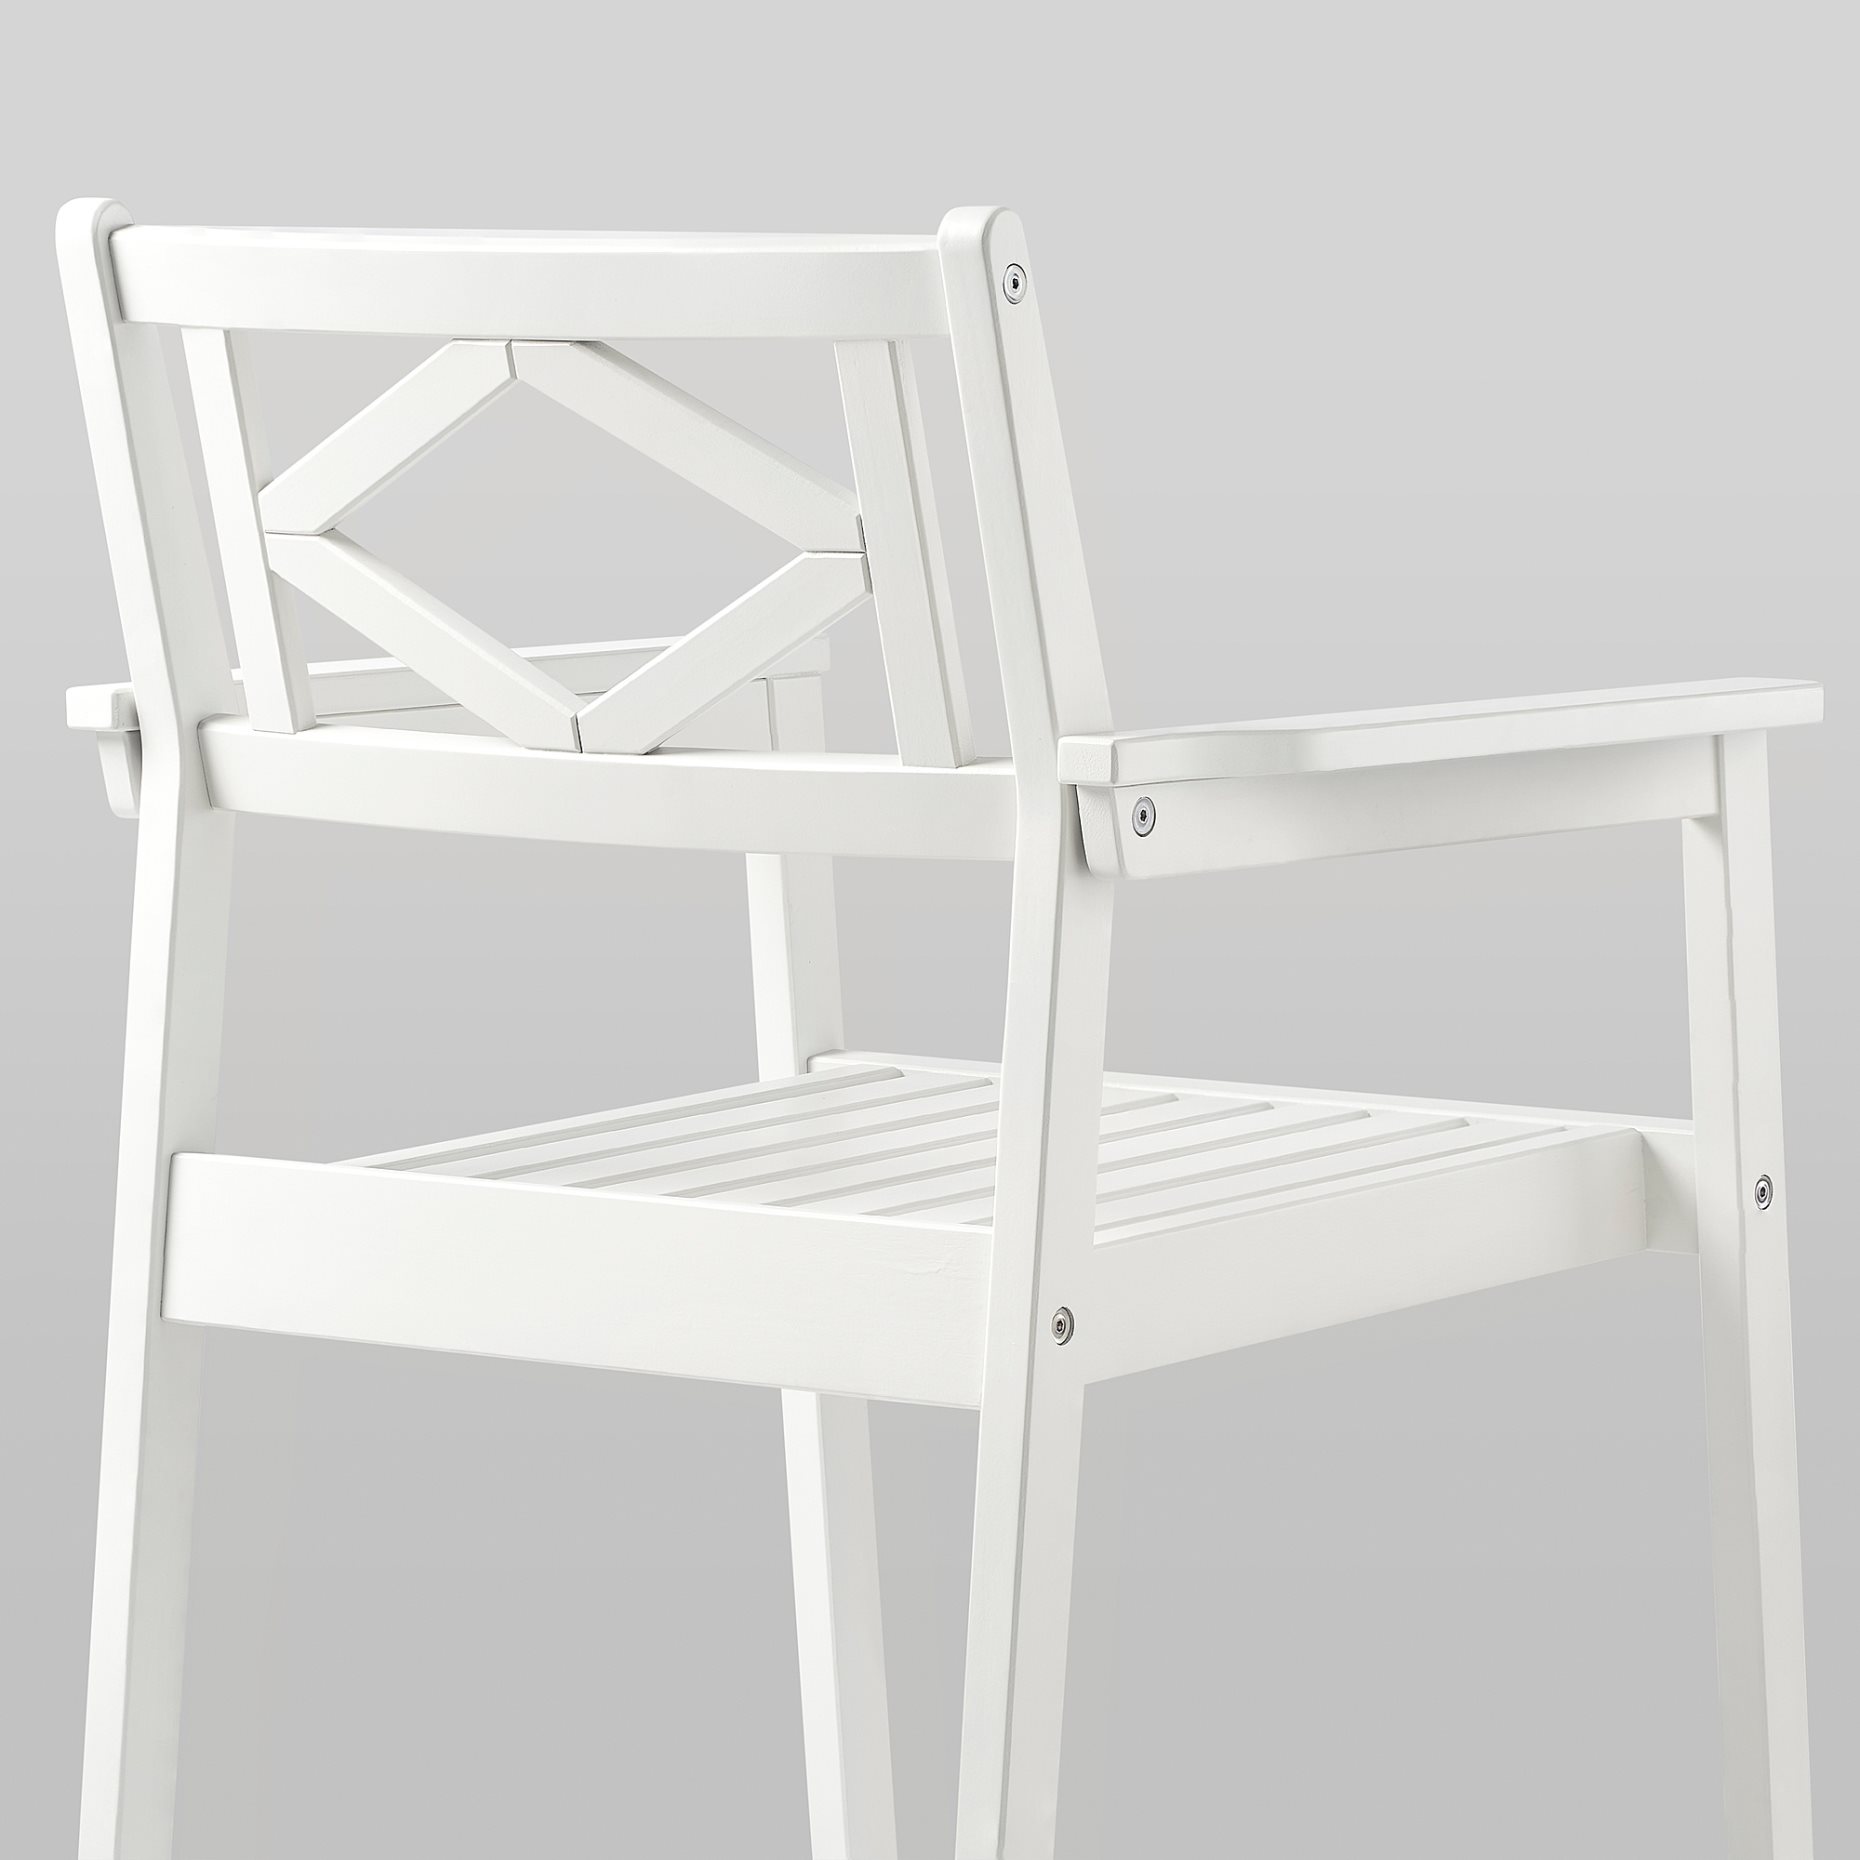 BONDHOLMEN, chair with armrests, outdoor, 105.581.73